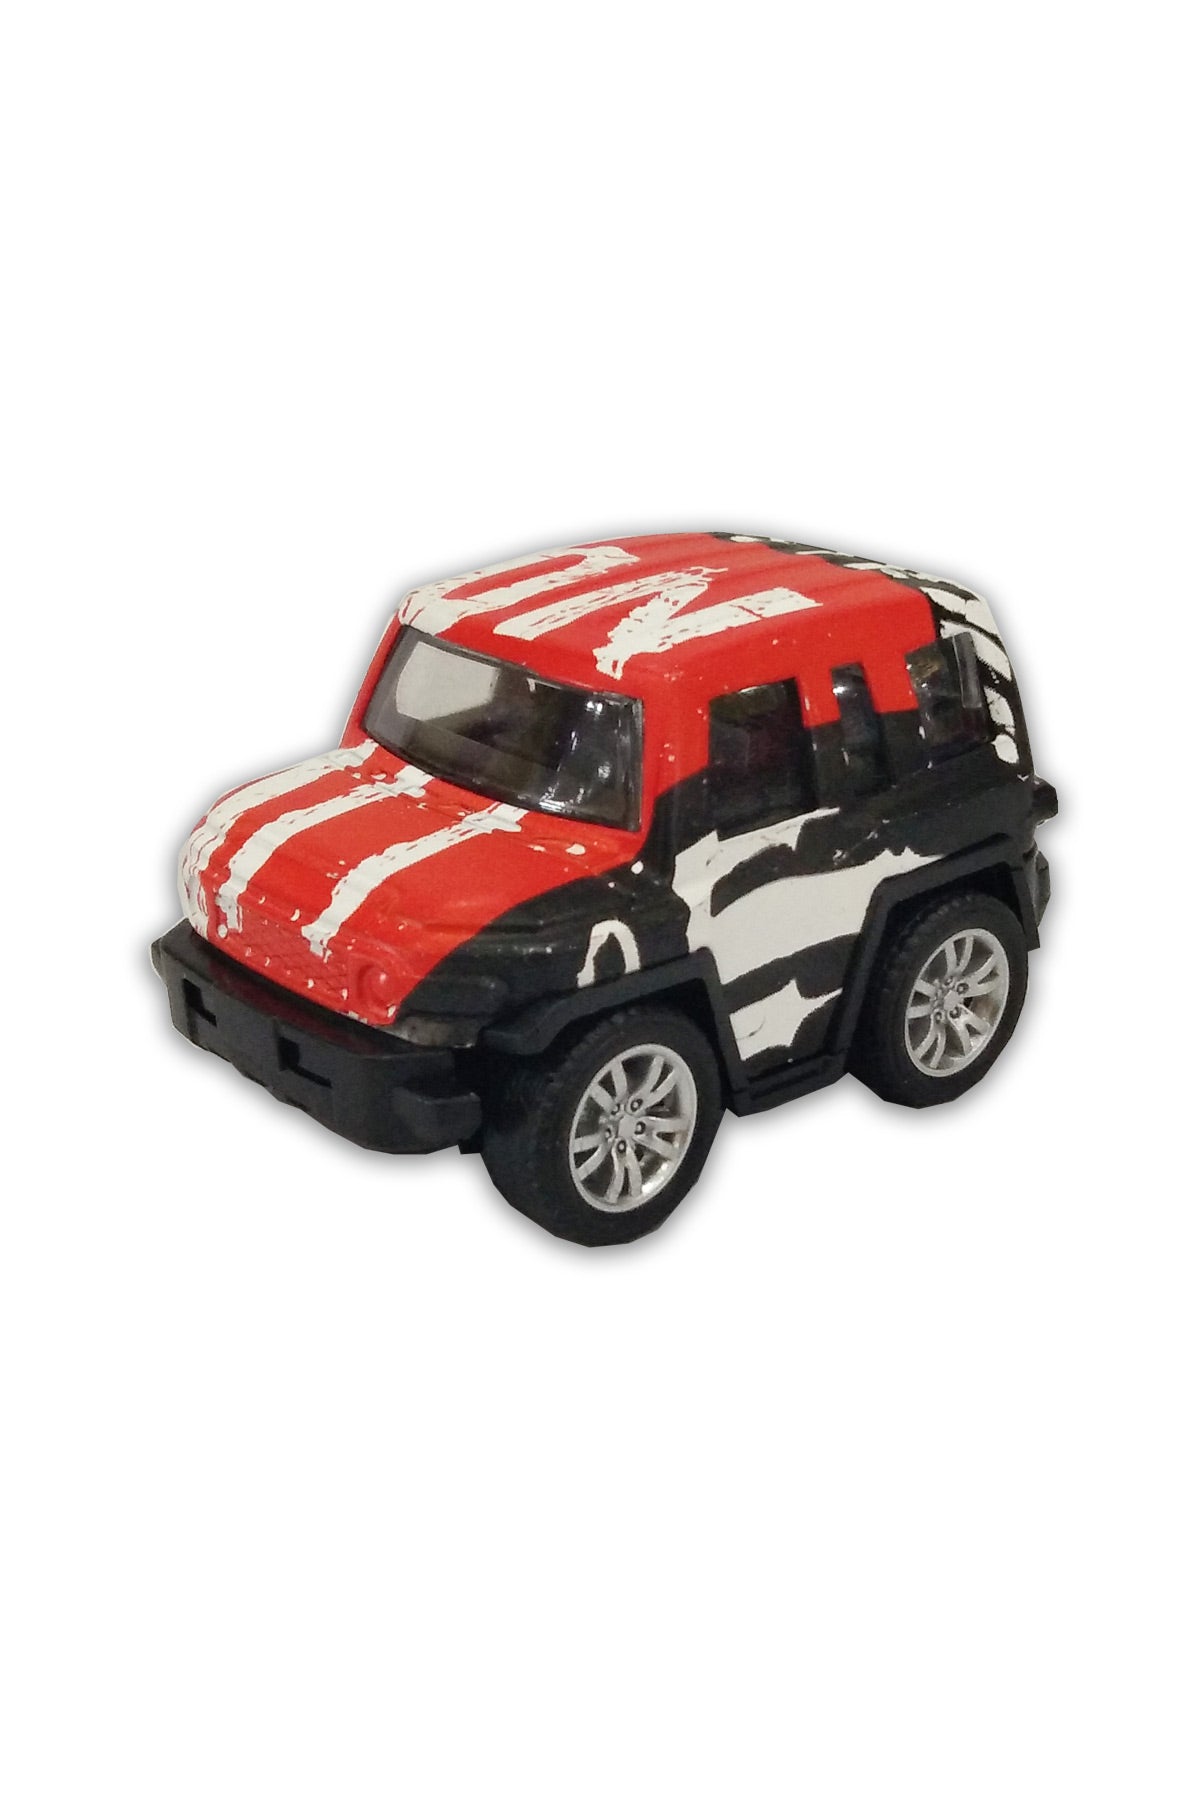 Toy Plastic Car Set